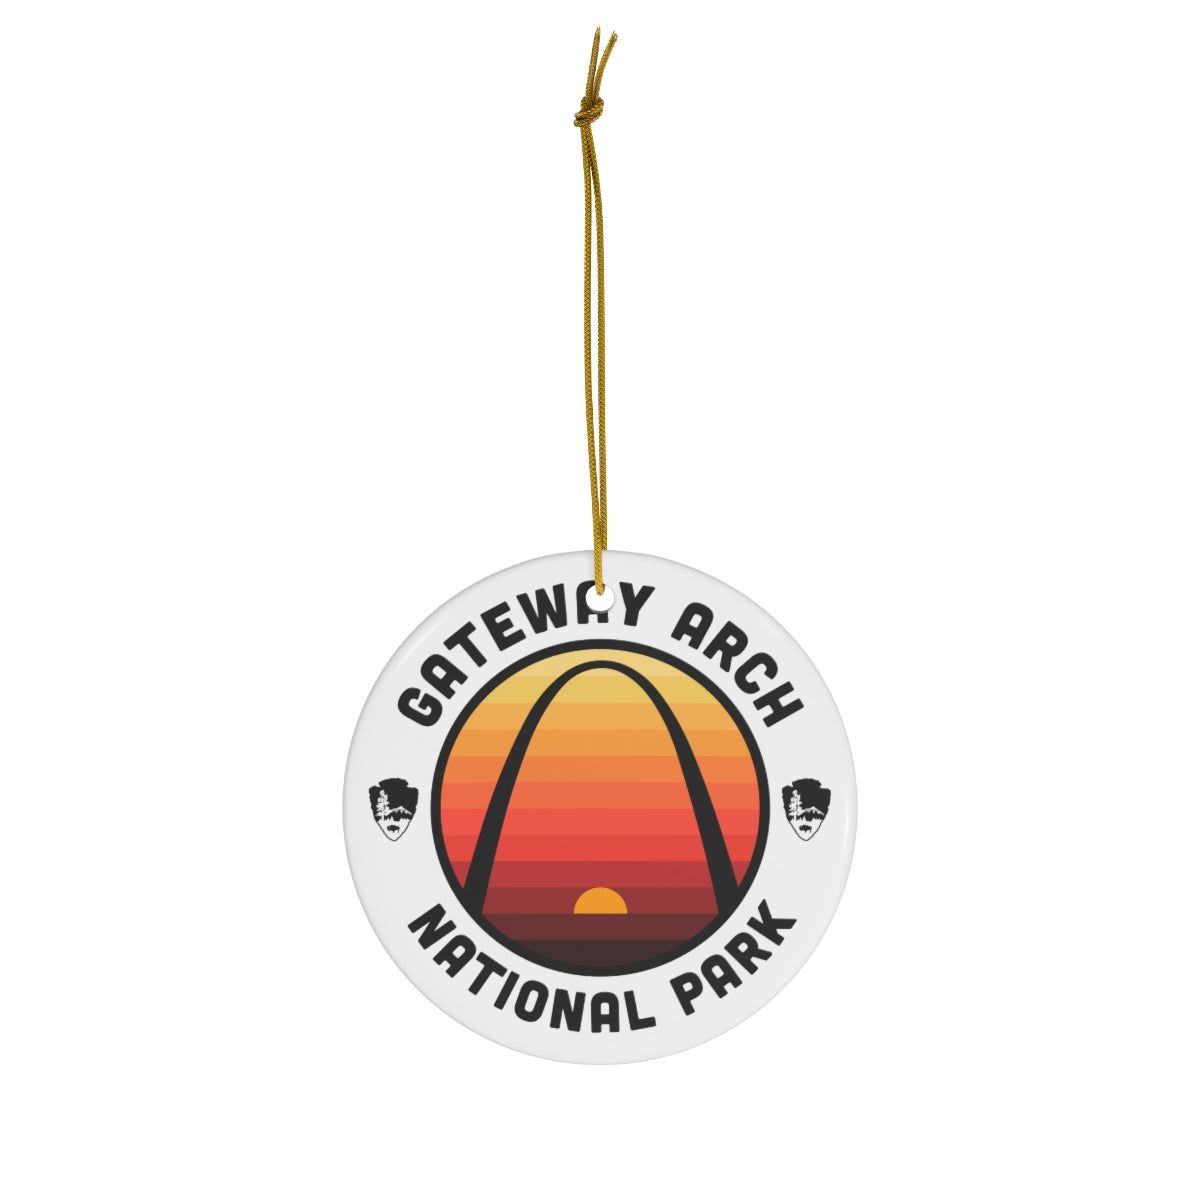 Gateway Arch National Park Ornament - Round Emblem Design